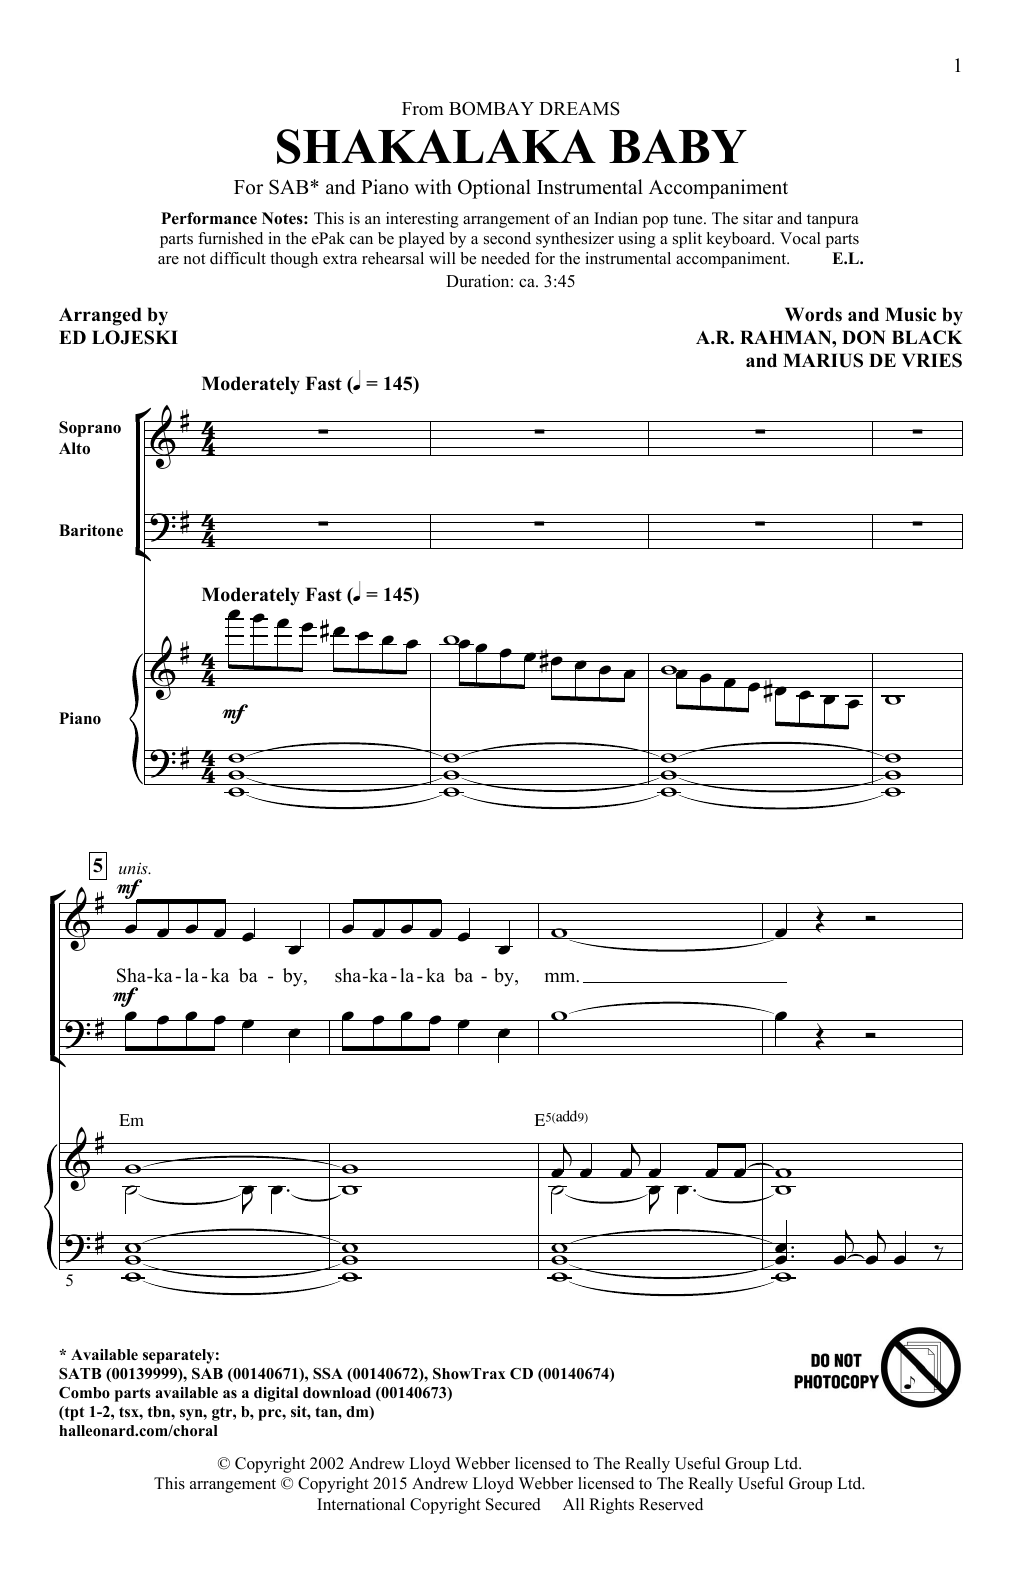 Ed Lojeski Shakalaka Baby (from Bombay Dreams) Sheet Music Notes & Chords for SSA - Download or Print PDF